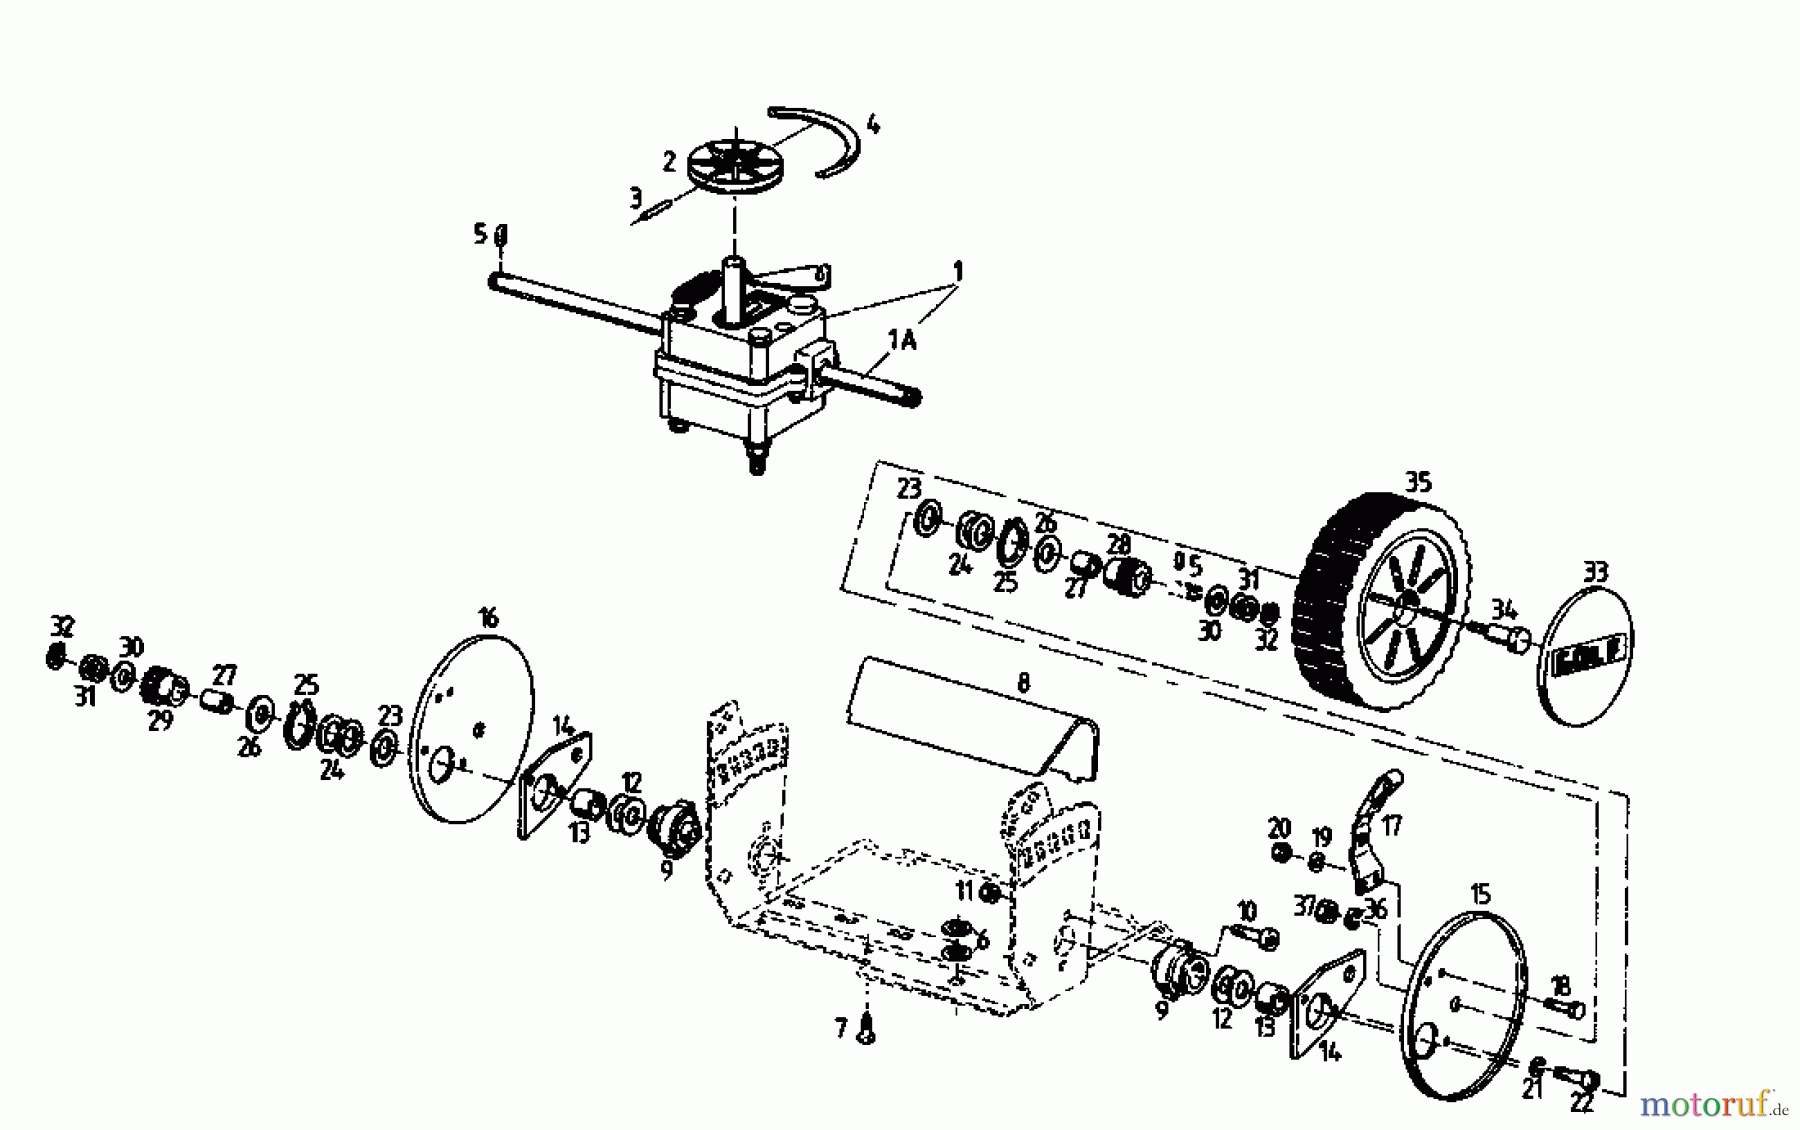  Golf Petrol mower self propelled BRL 04033.01  (1996) Gearbox, Wheels, Cutting hight adjustment